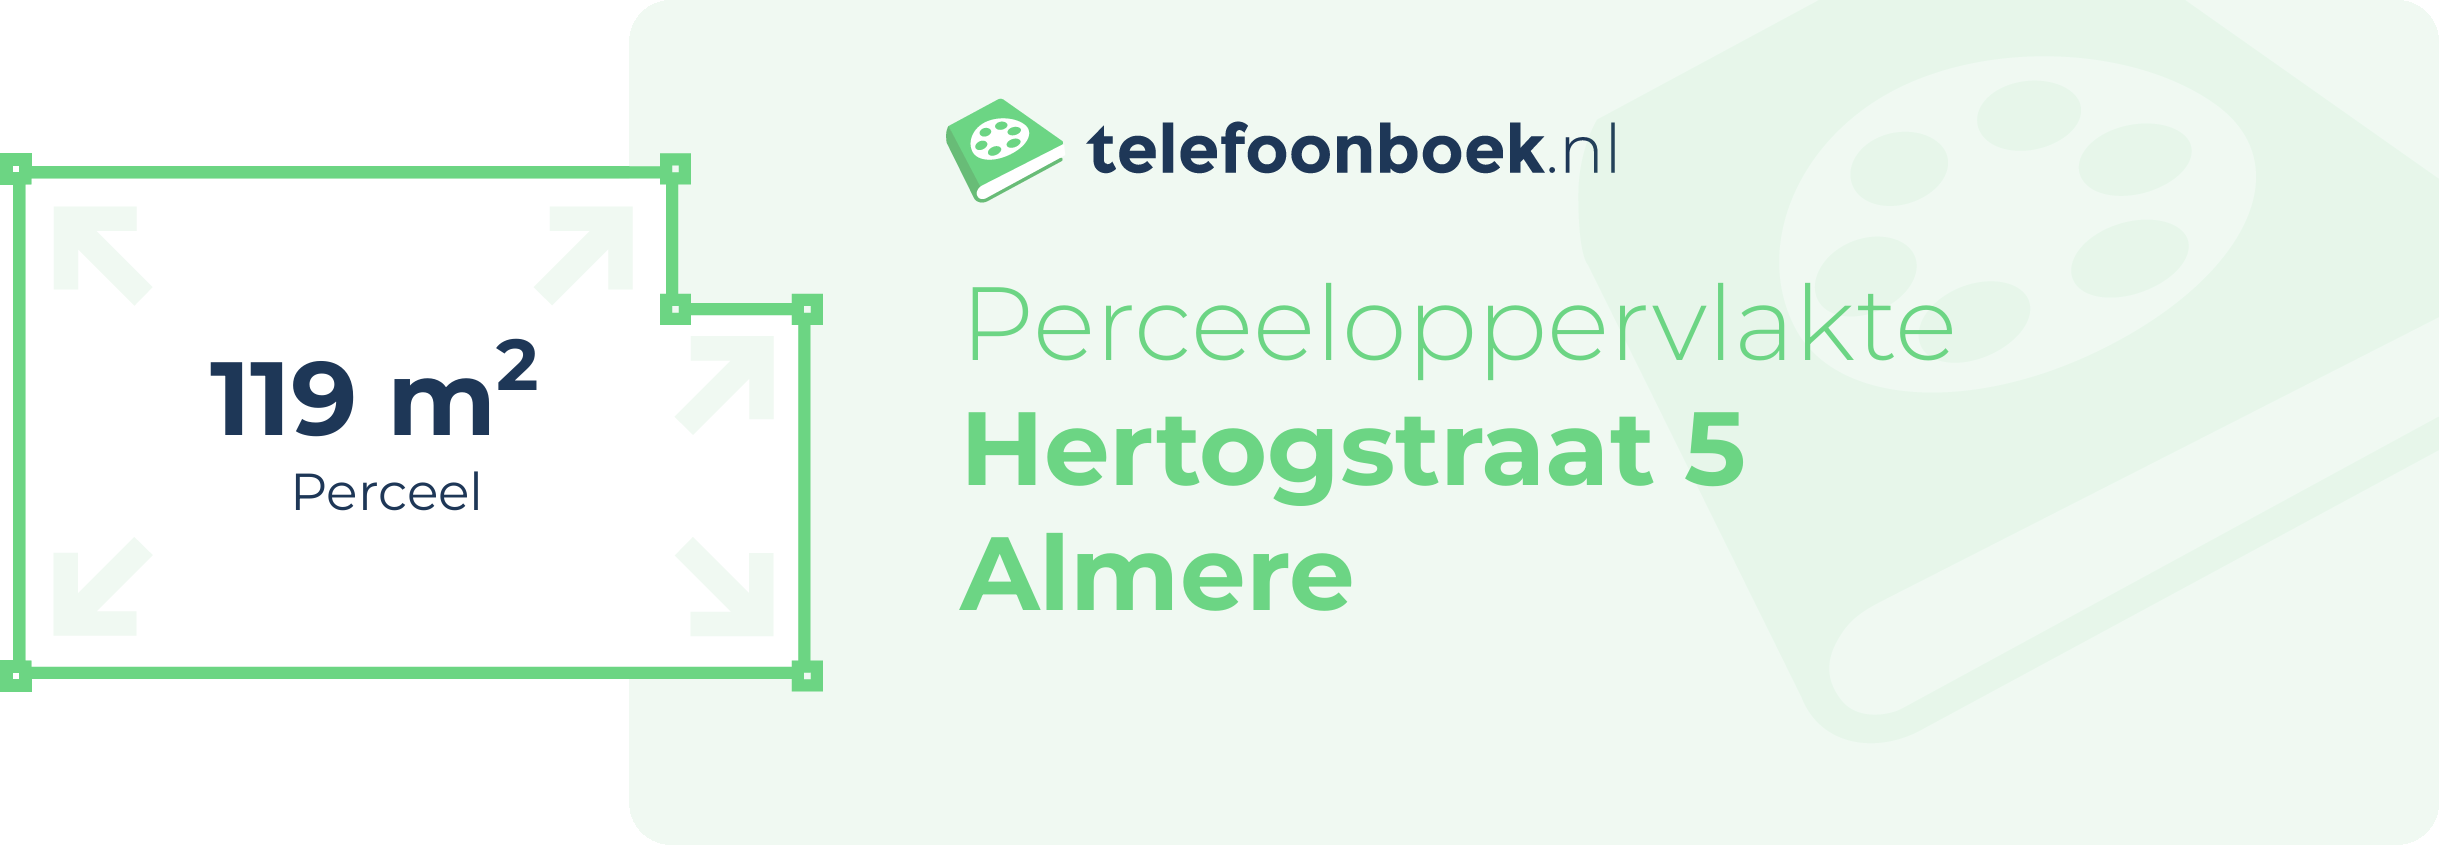 Perceeloppervlakte Hertogstraat 5 Almere